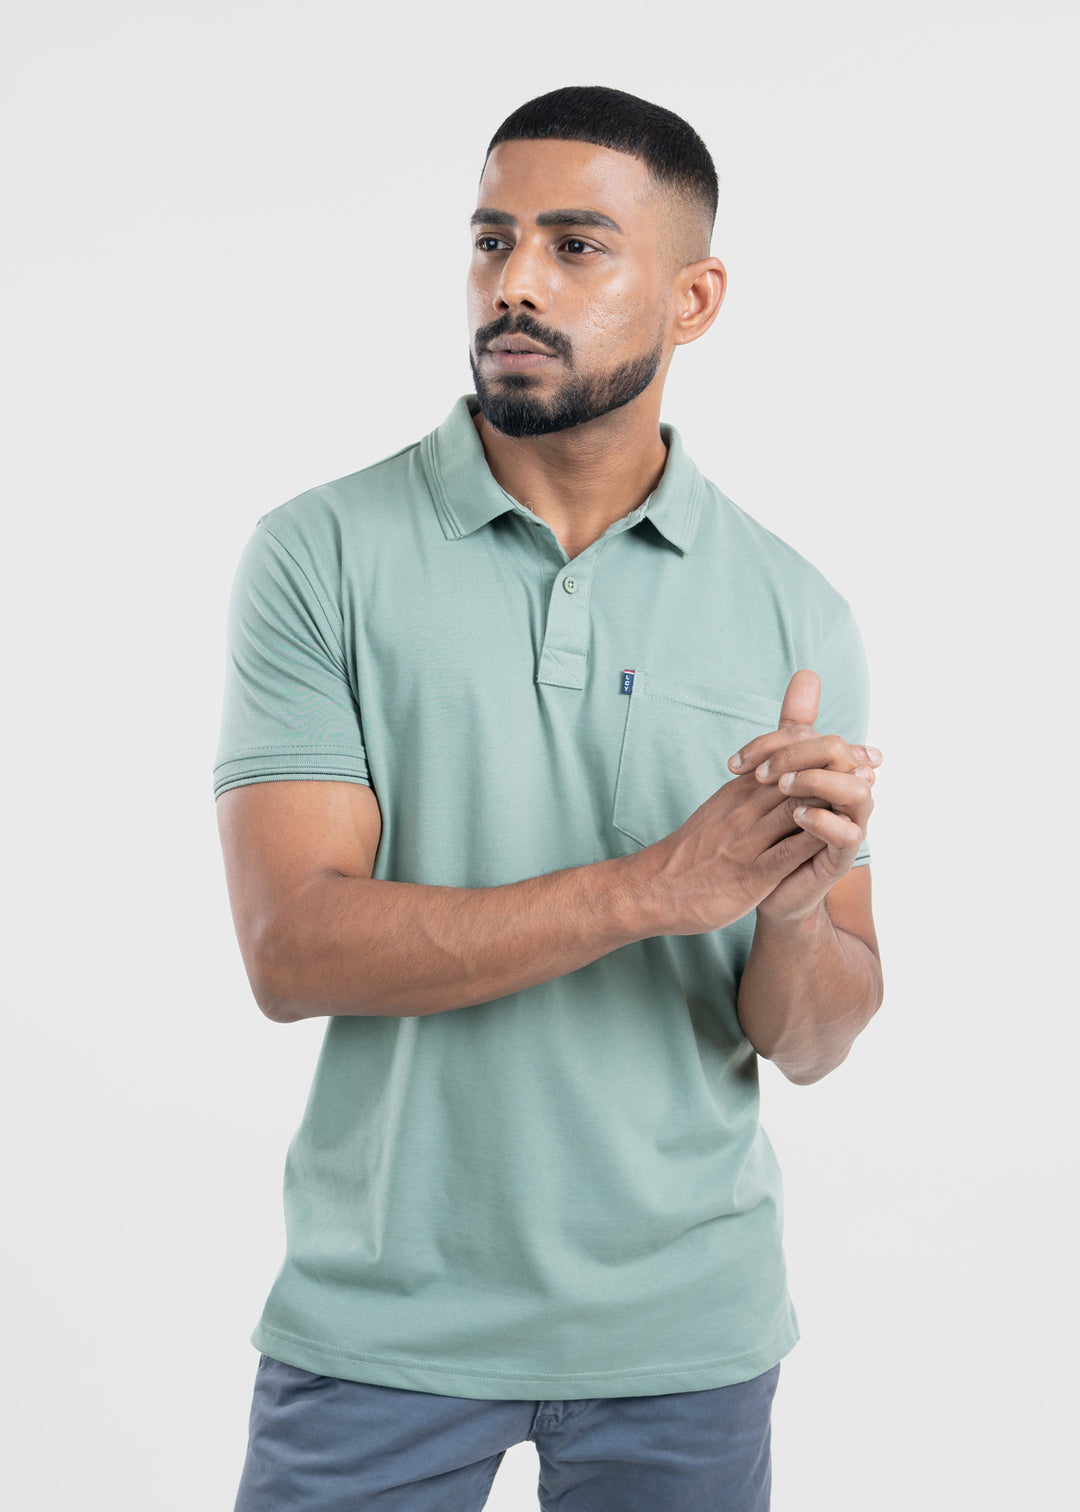 Buy Polo T-shirts online l Carlo Clothing l Sri Lanka